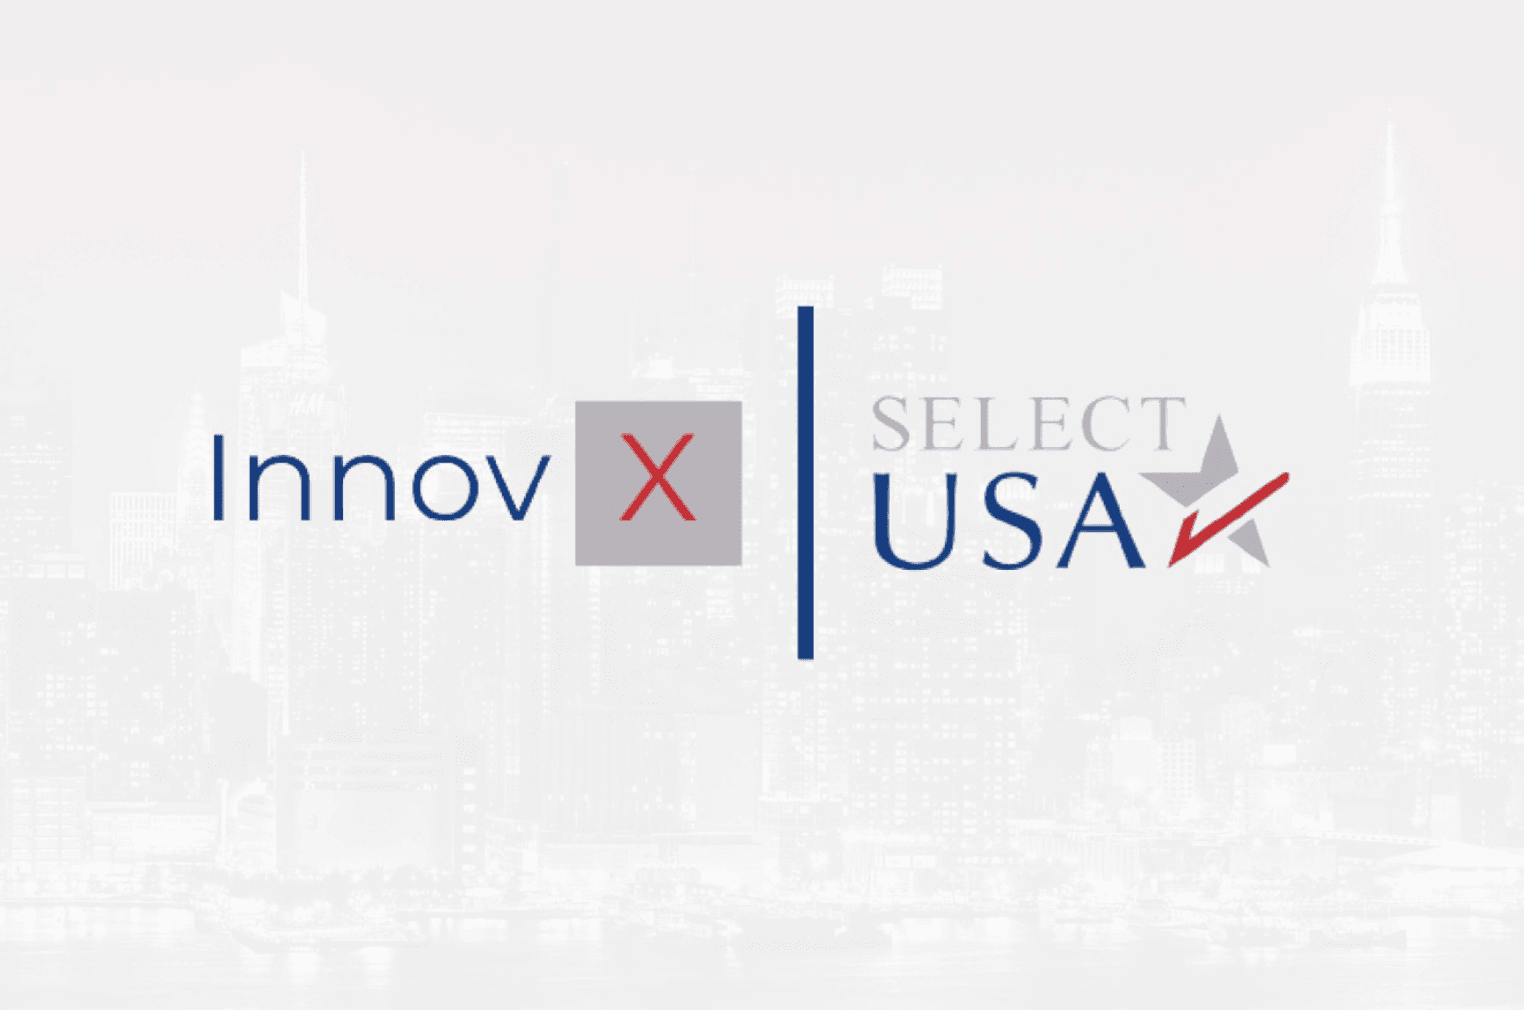 InnovX | Select USA